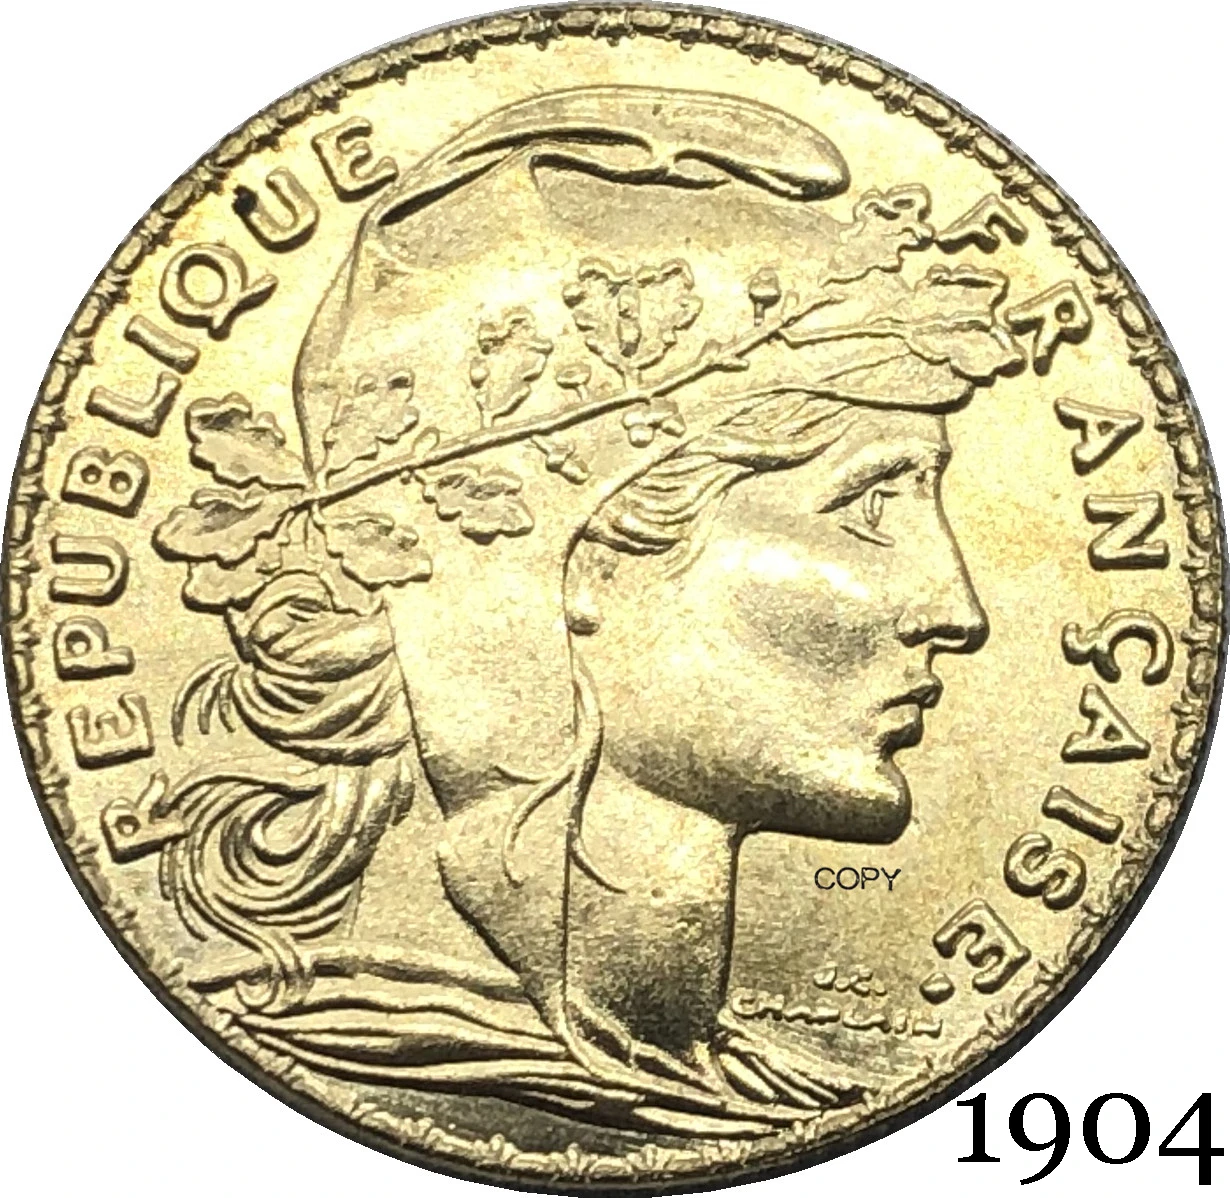 Réplica de la Tercera República de Francia, 20 dólares, moneda de de oro, latón, Metal, Liberte, monedas de producción|Monedas sin curso legal| - AliExpress